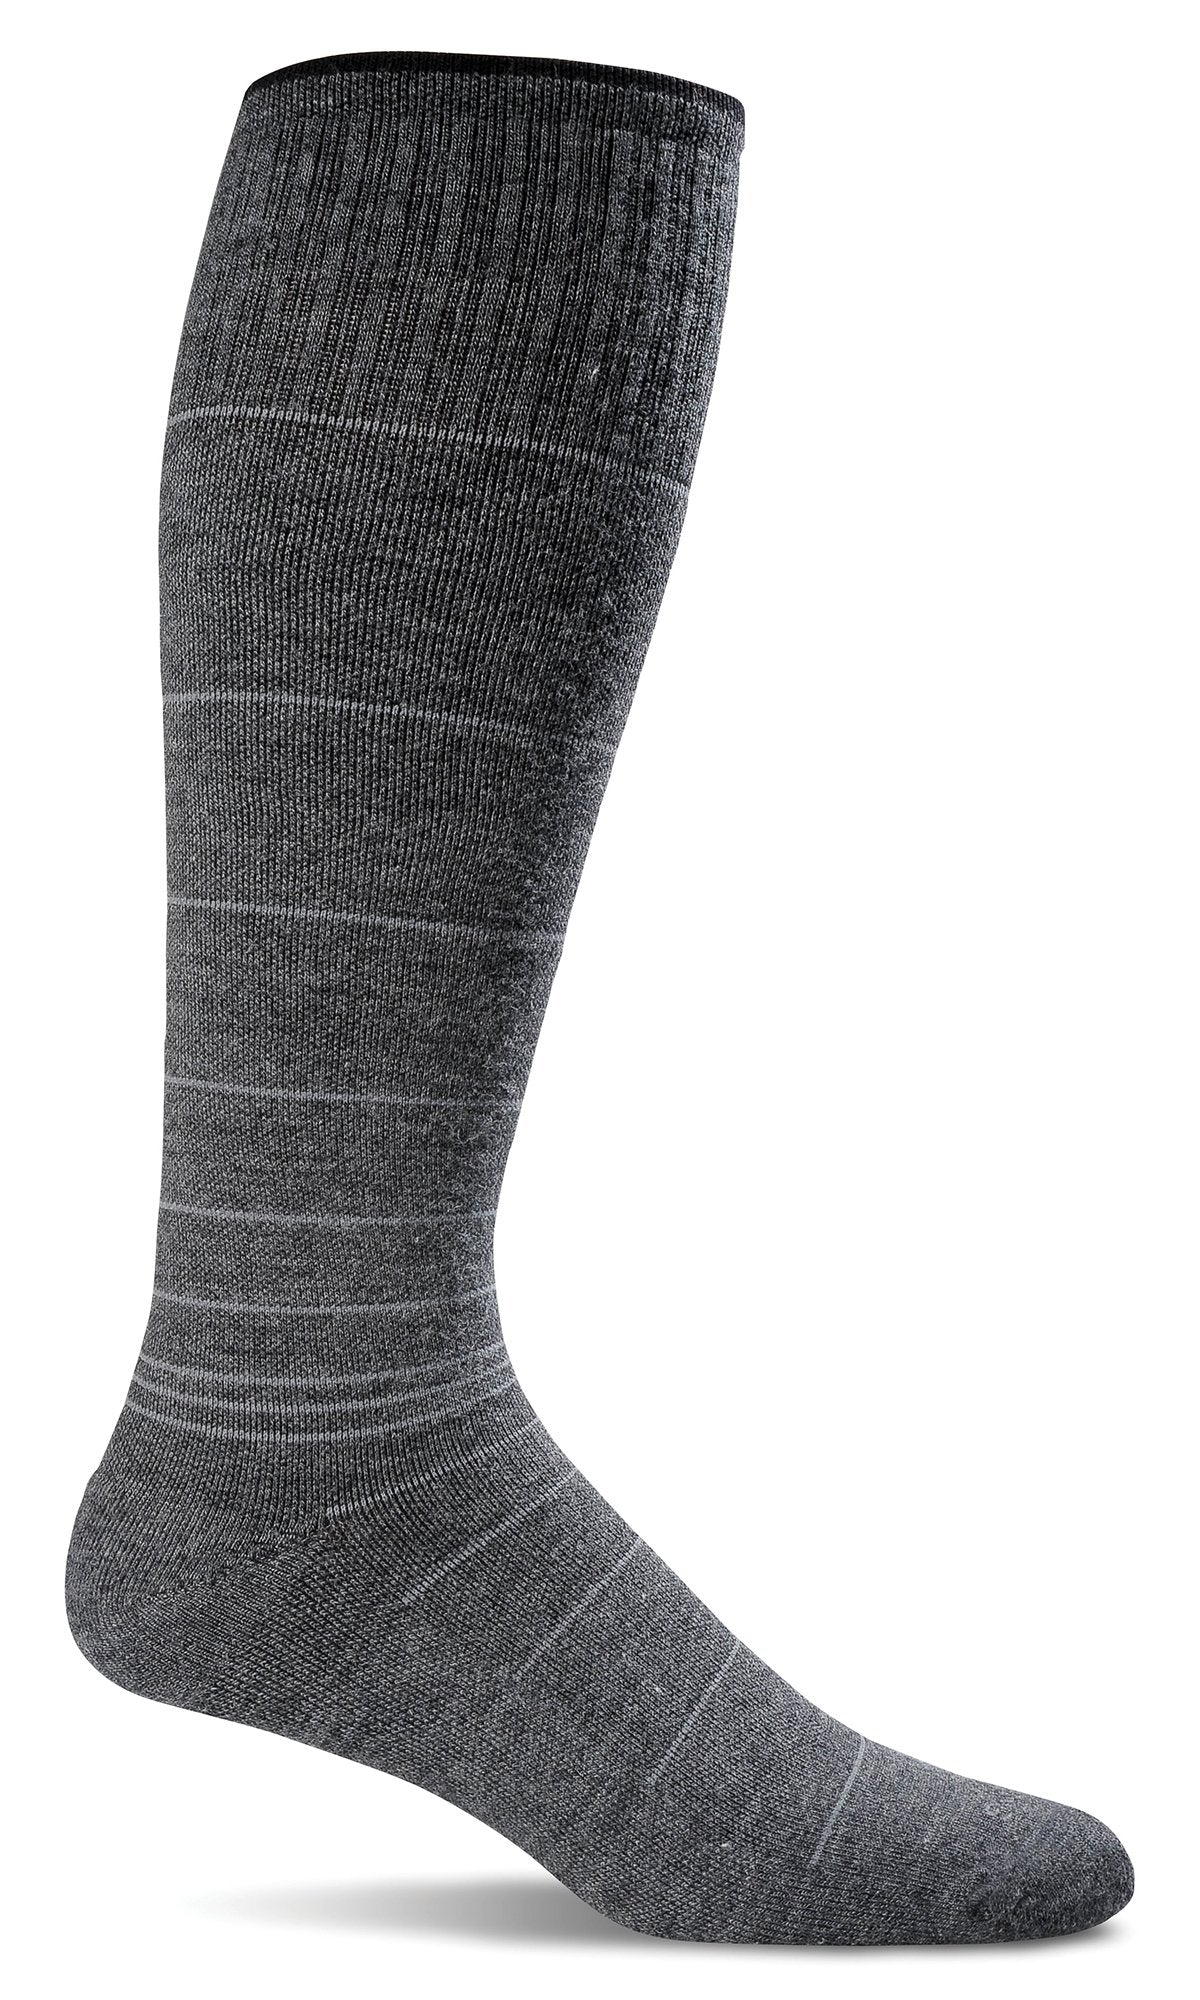 Sockwell Best-selling Men's Circulator Merino Wool Compression Socks in Charcoal